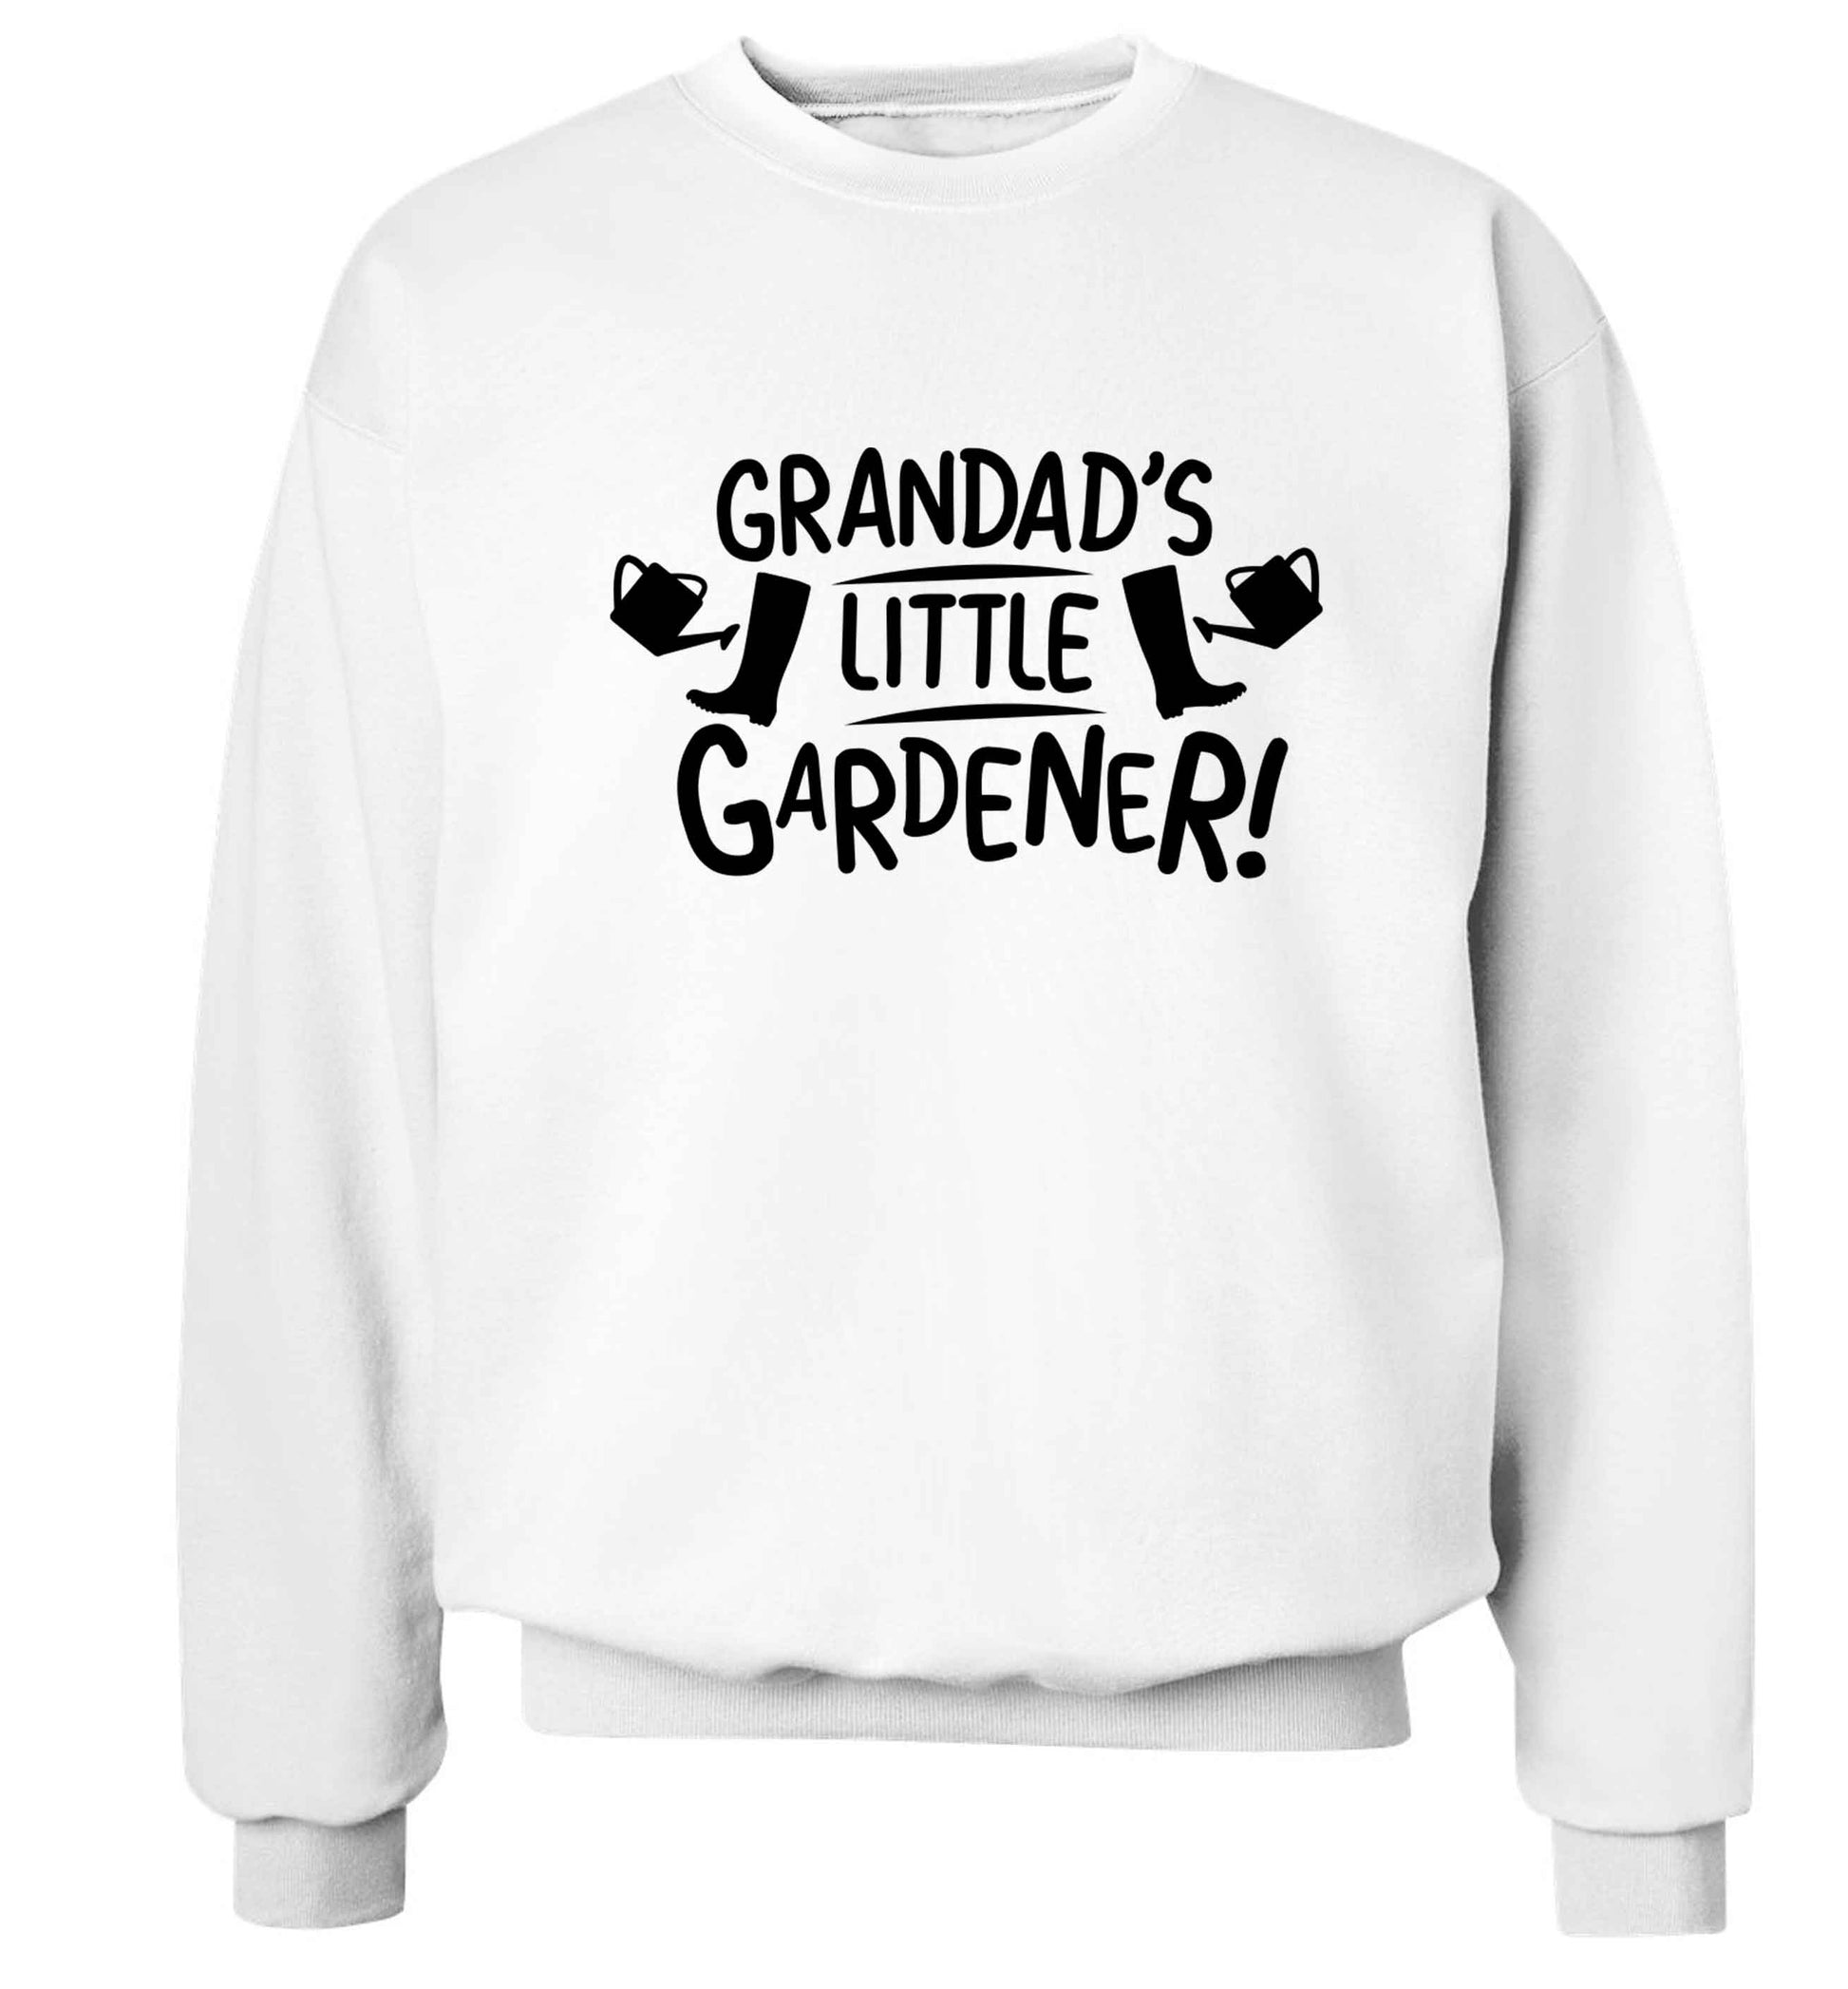 Grandad's little gardener Adult's unisex white Sweater 2XL